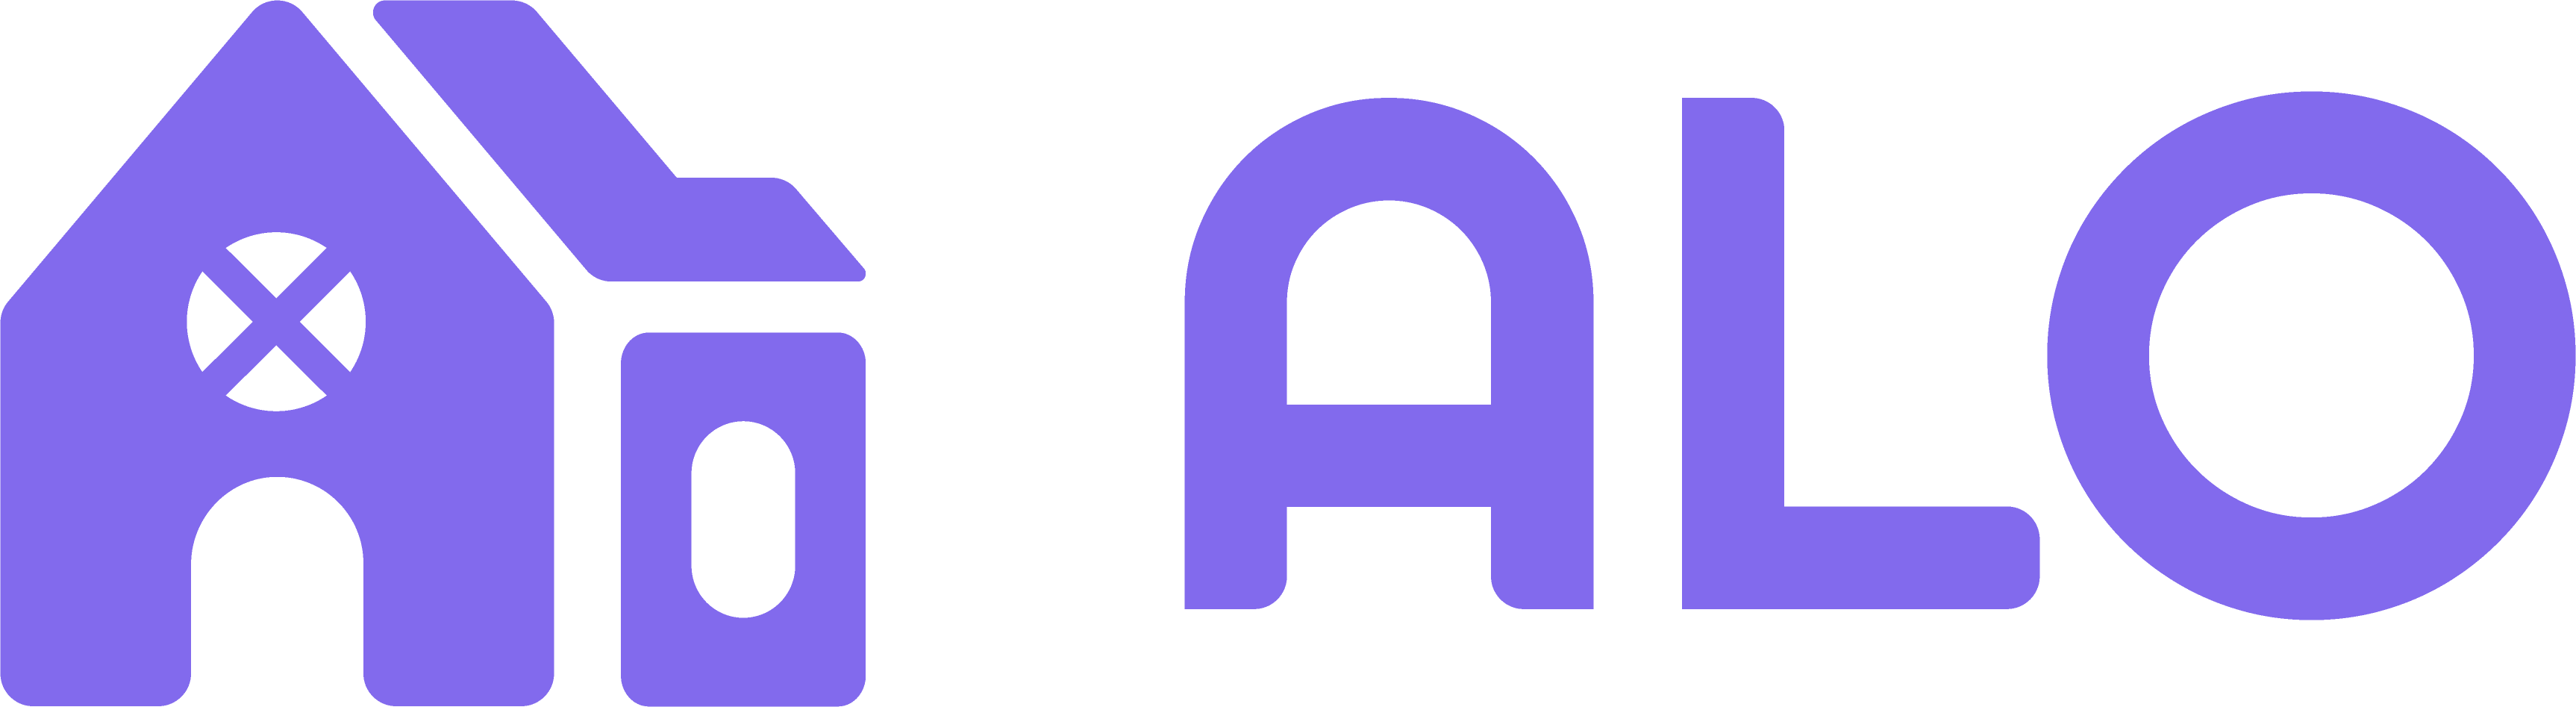 Alo_logo_purple (1).png